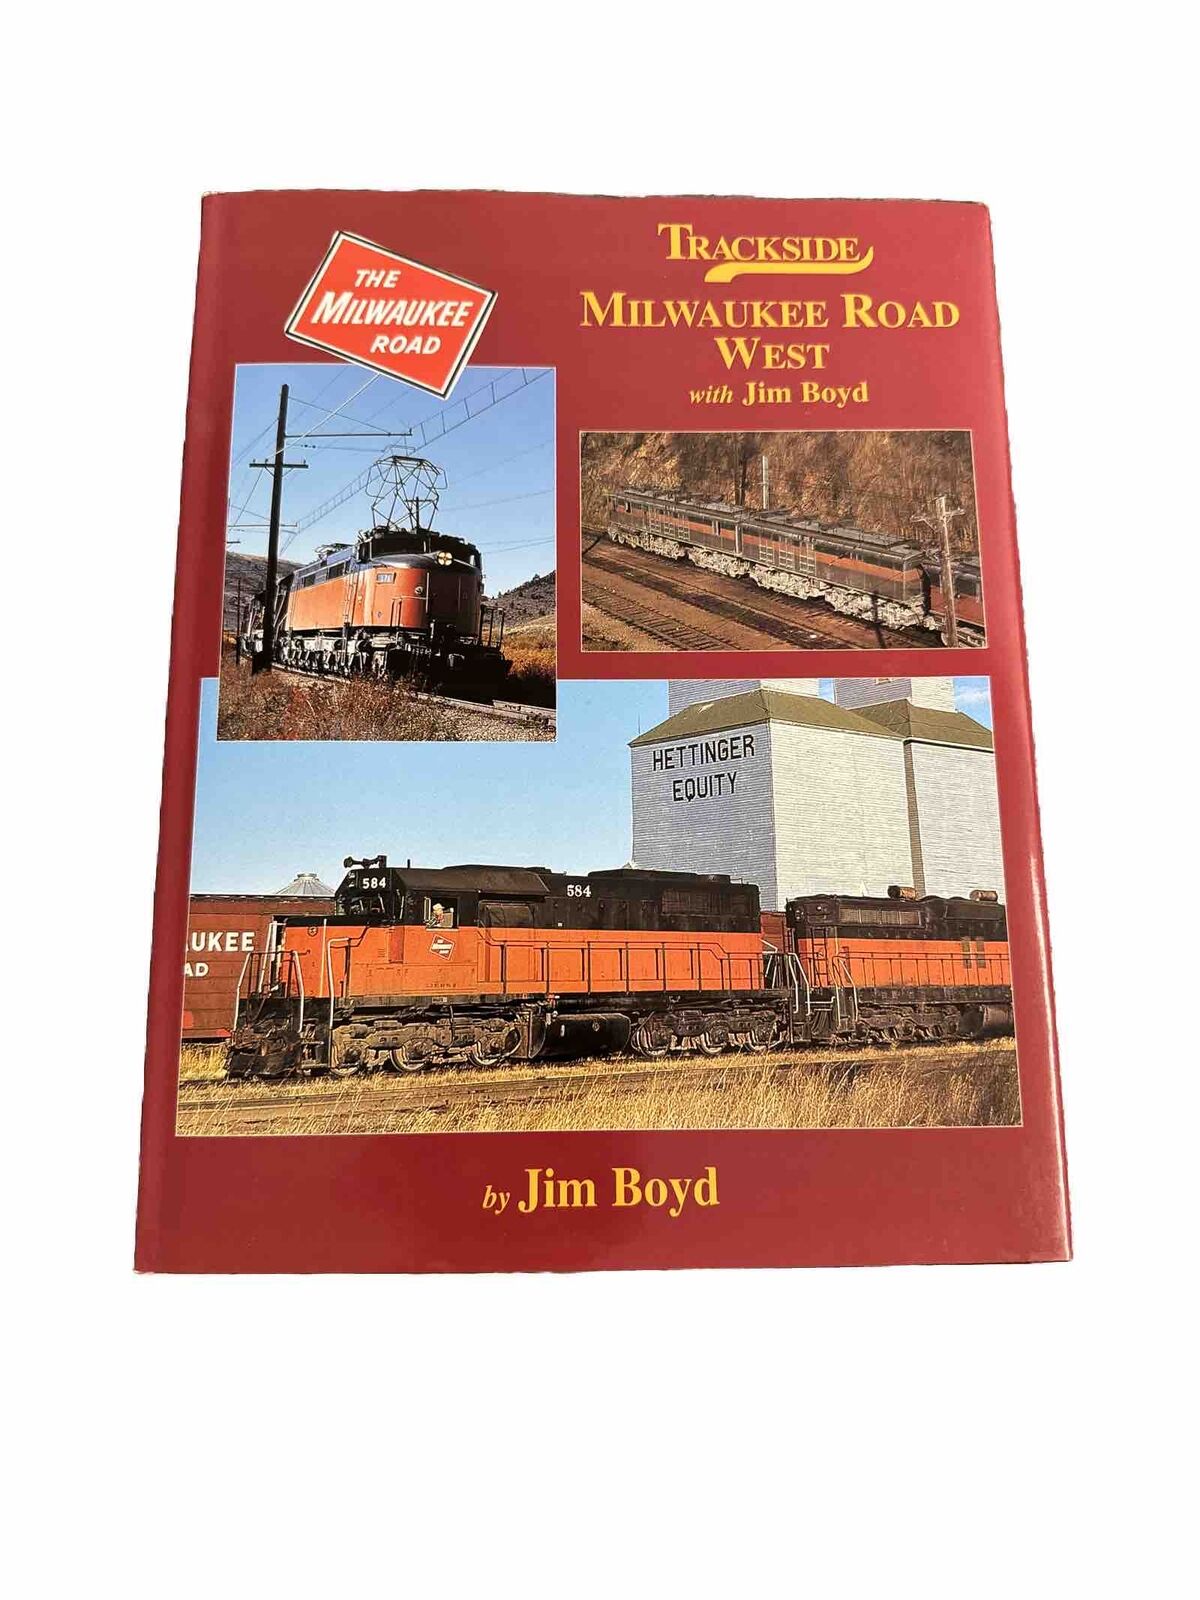 Trackside Milwaukee Road West by Jim Boyd - Hard Copy in Dust Jacket MINT